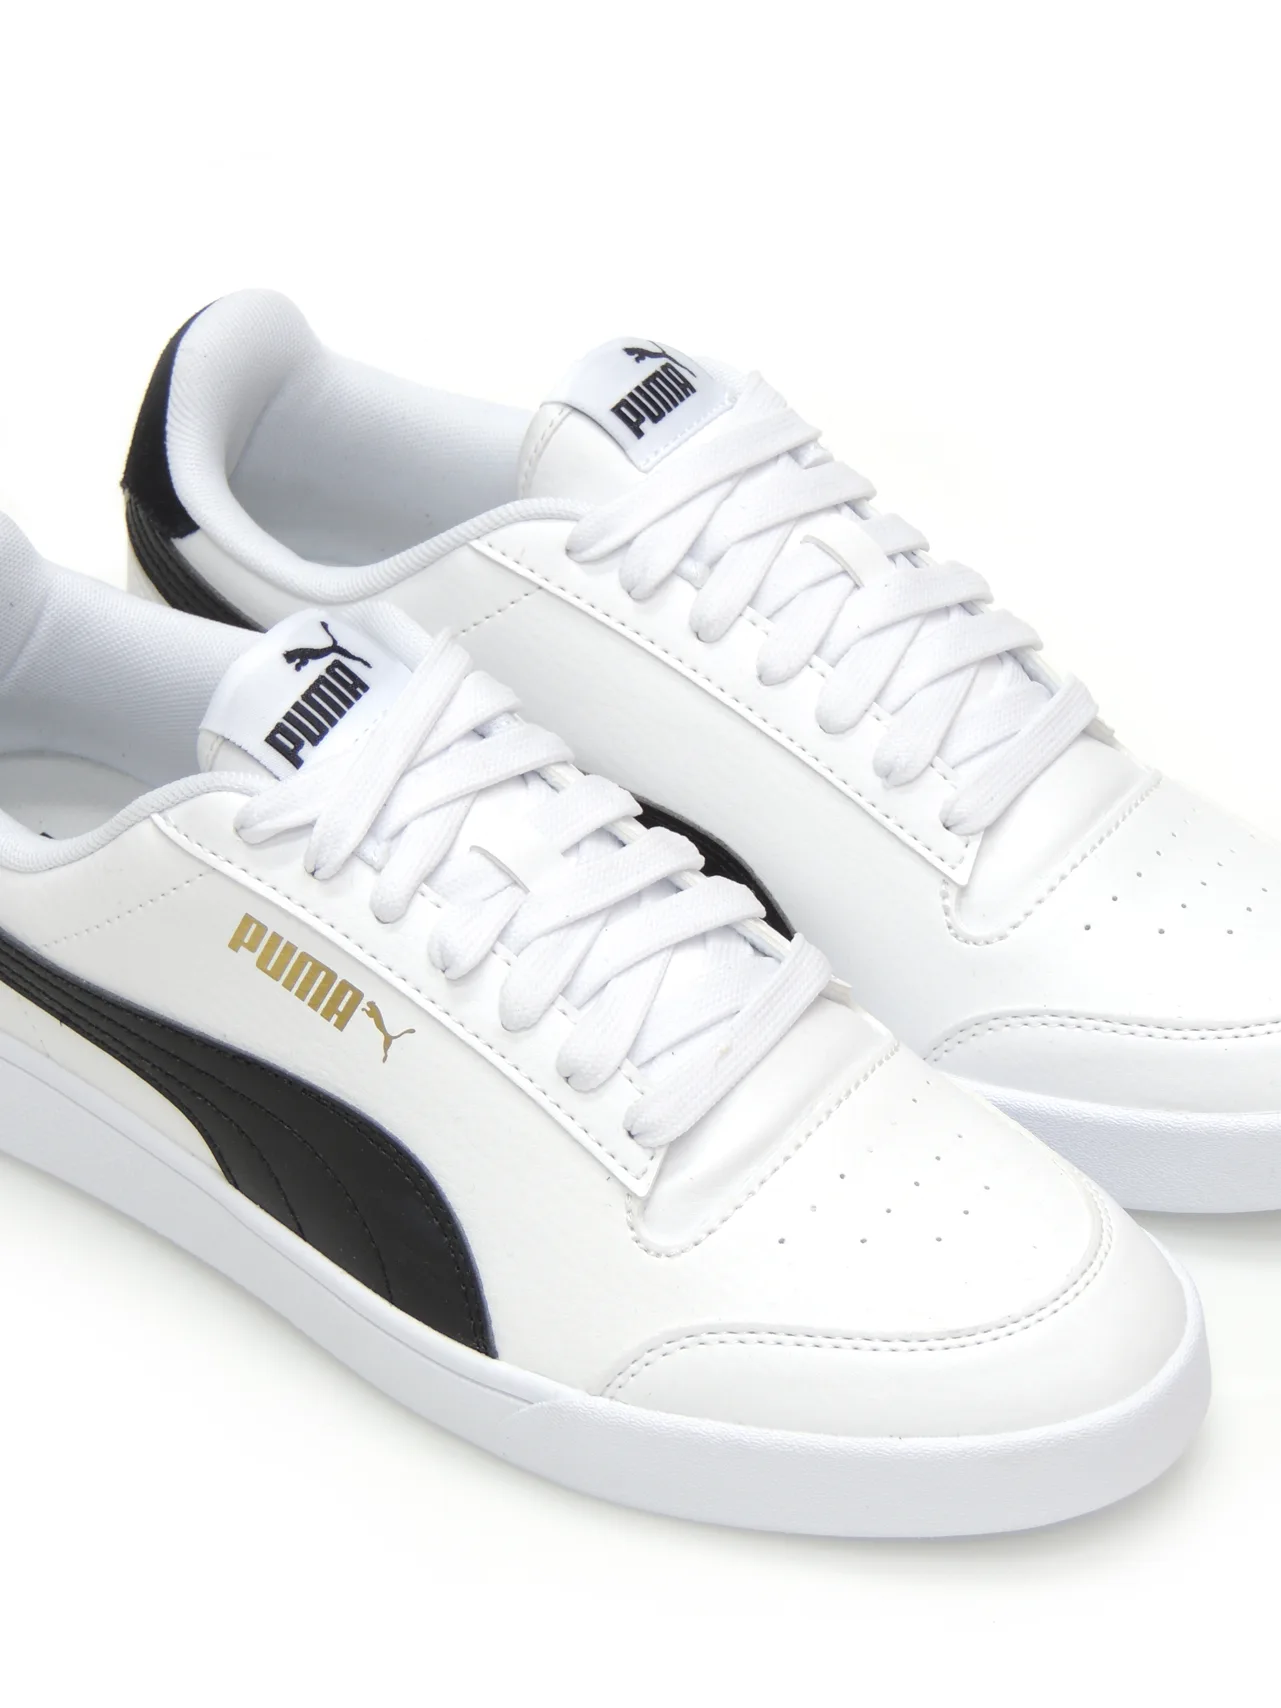 sneakers--puma-309668-polipiel-blanco